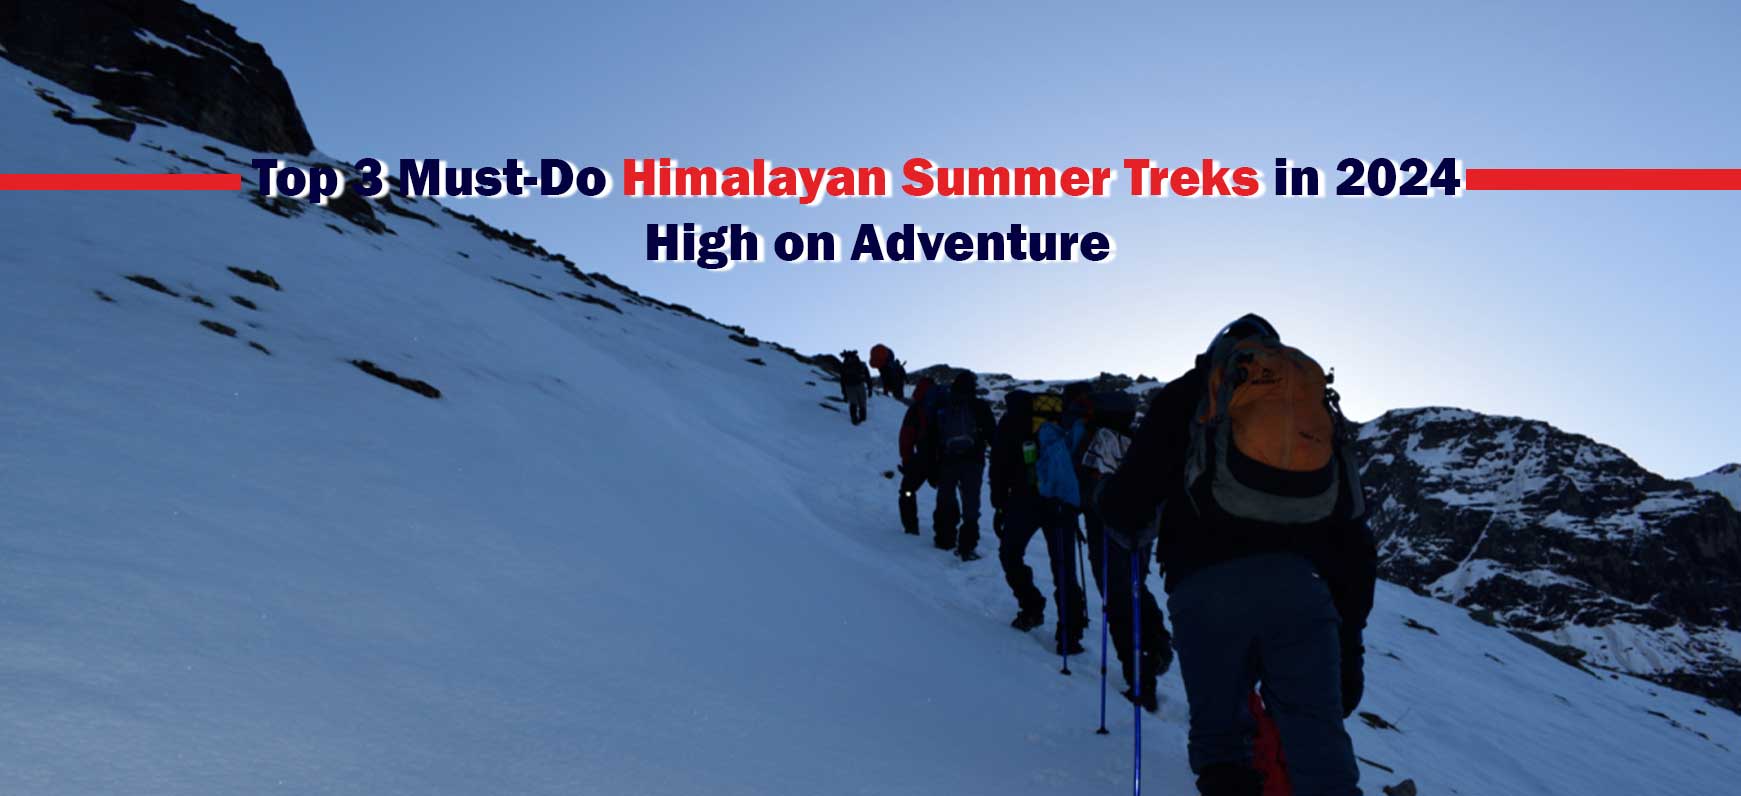 Top 3 Must-Do Himalayan Summer Treks in 2024 - High on Adventure